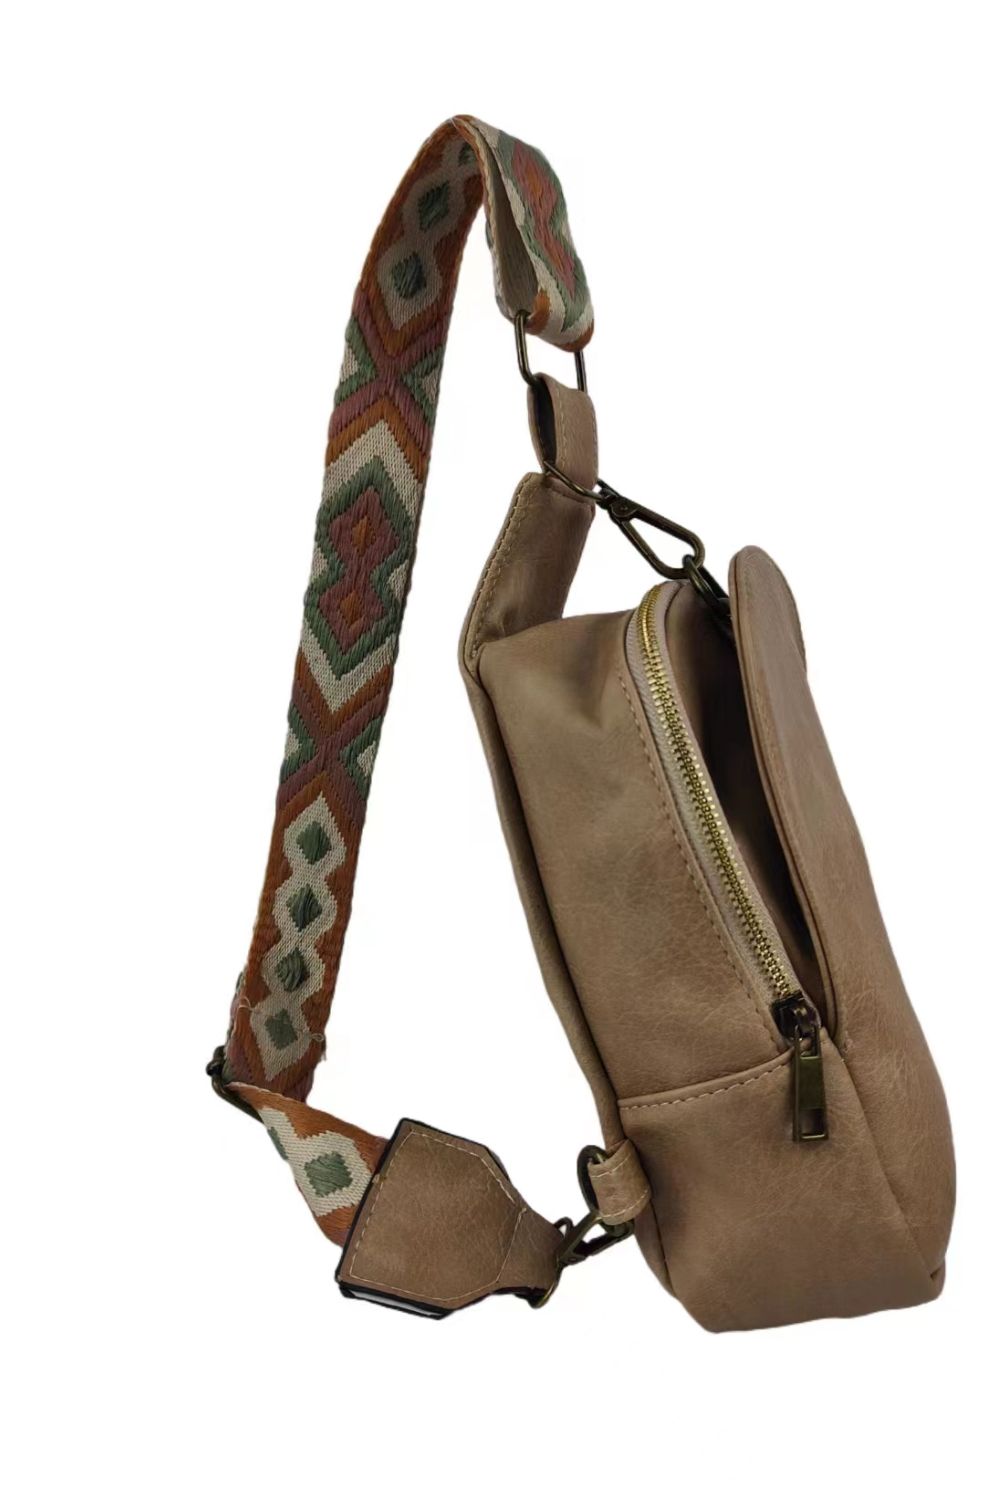 Adjustable Strap PU Leather Sling Bag - PINKCOLADA-Bags-100100060833081